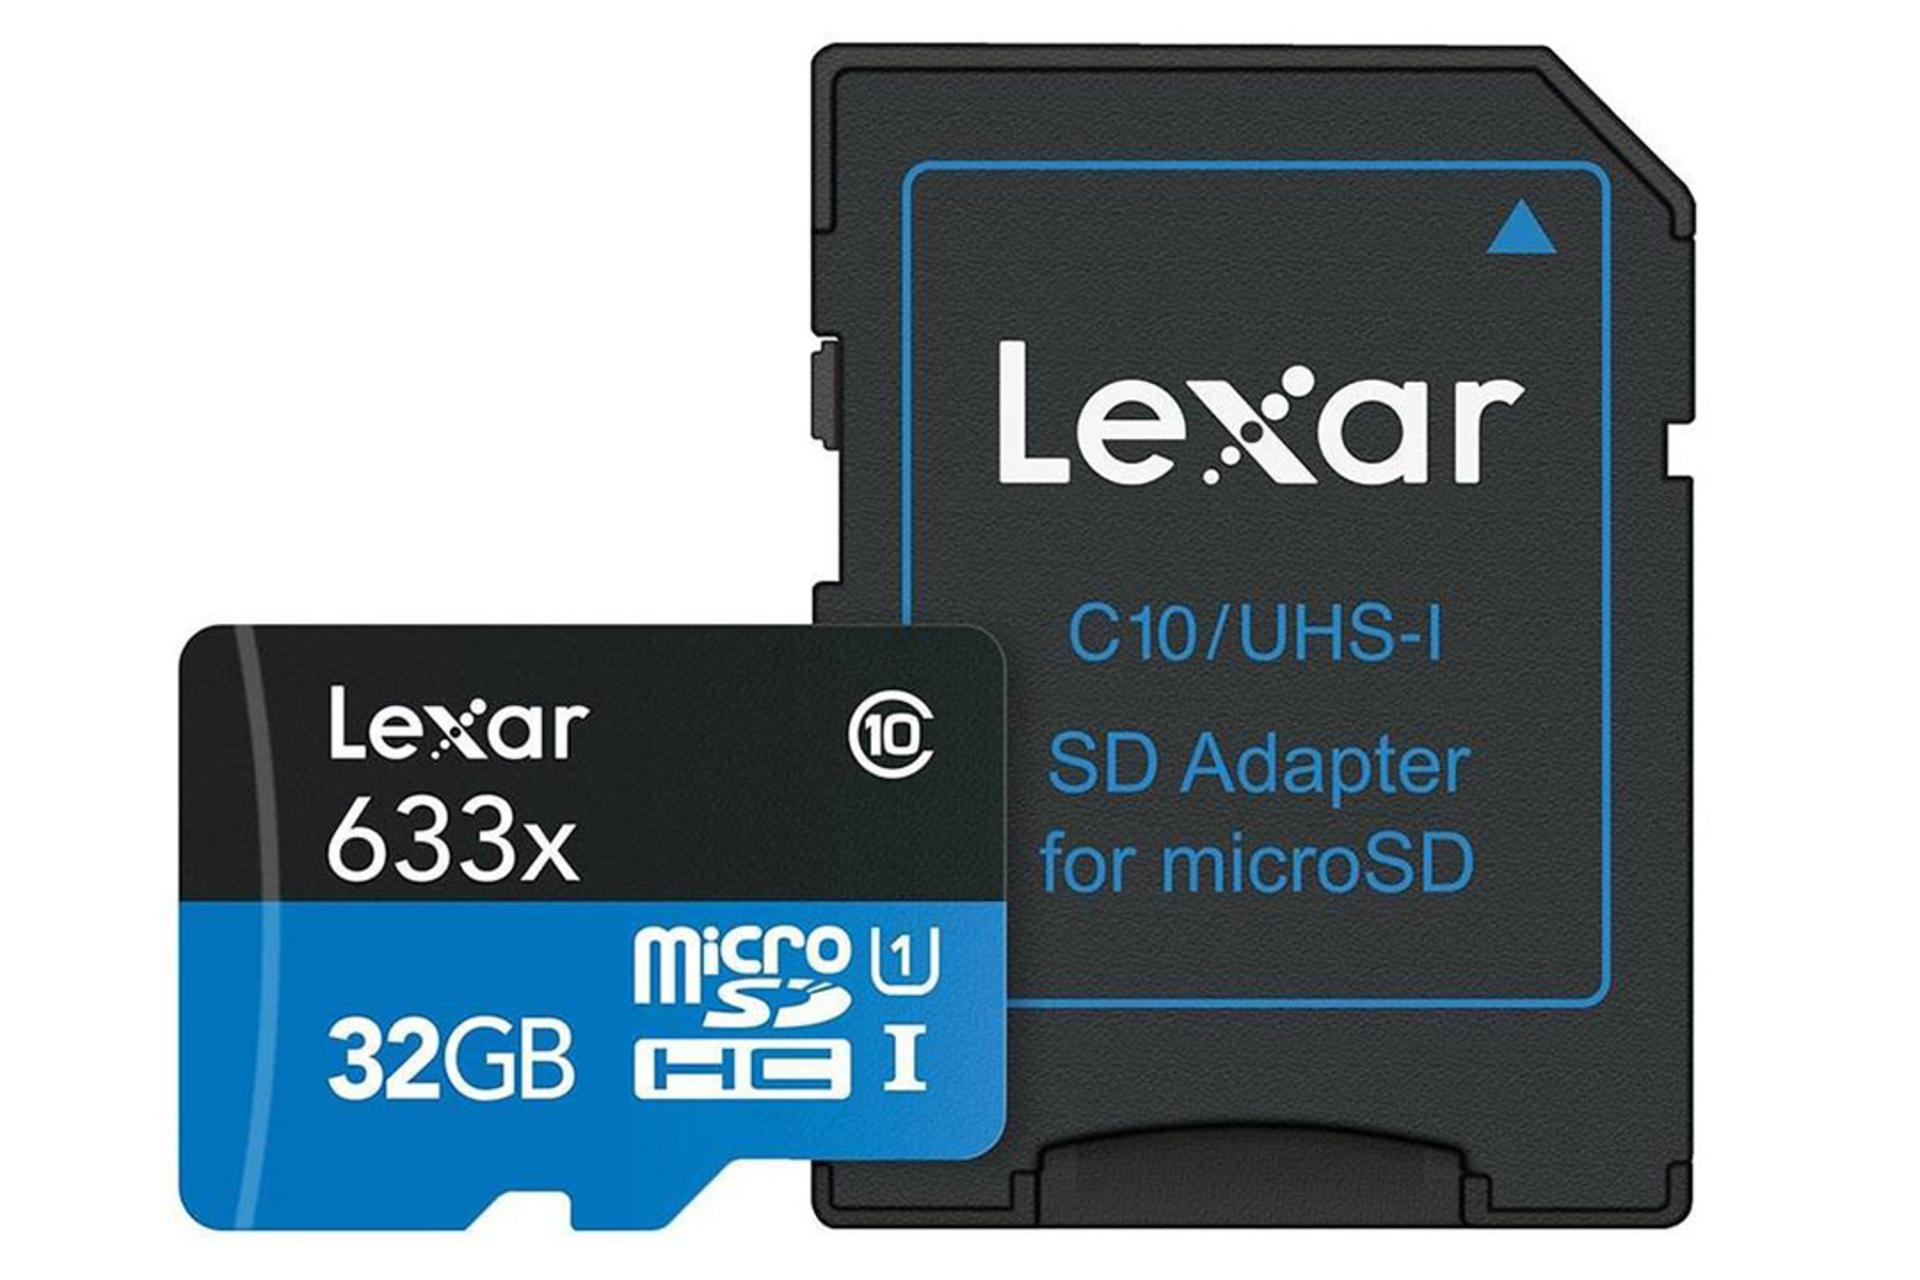 Lexar High Performance microSDHC Class 10 UHS-I U1 32GB